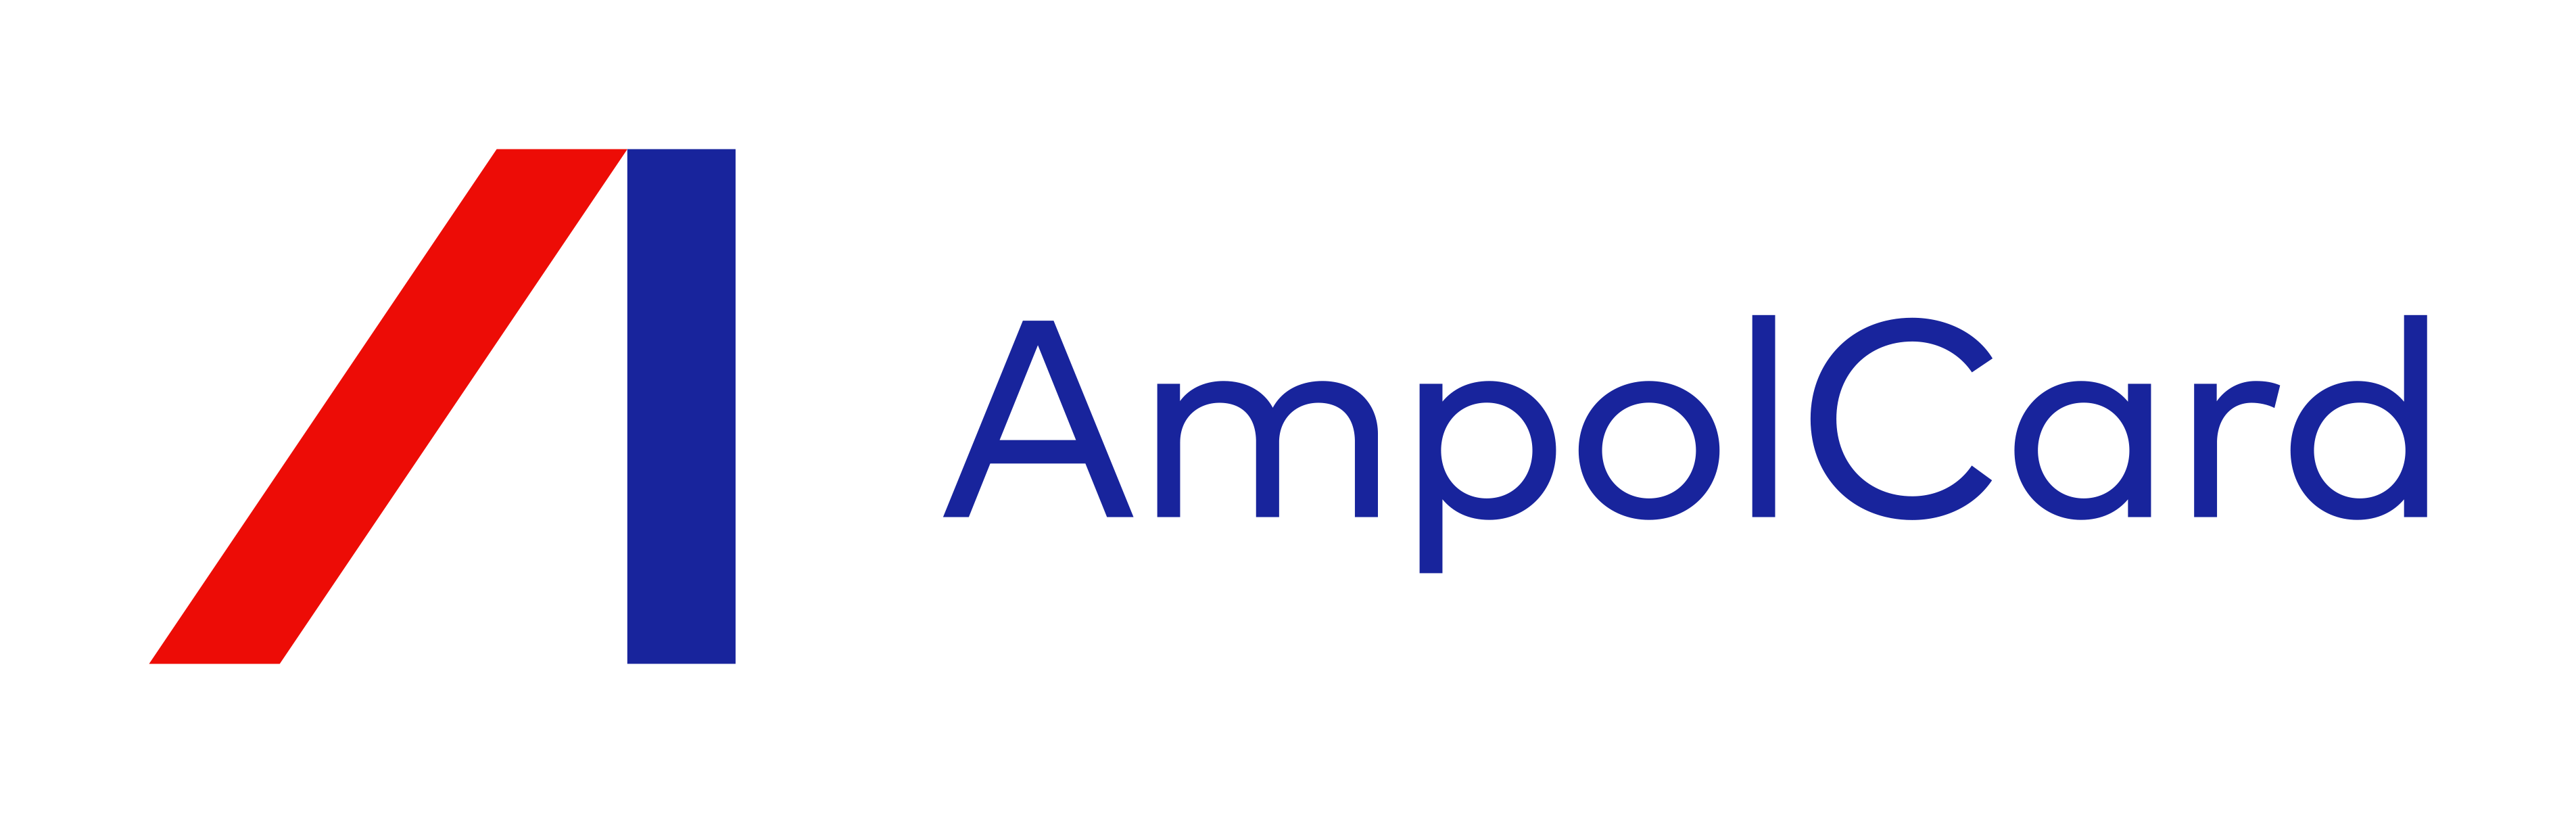 Ampol Fuel Partnership